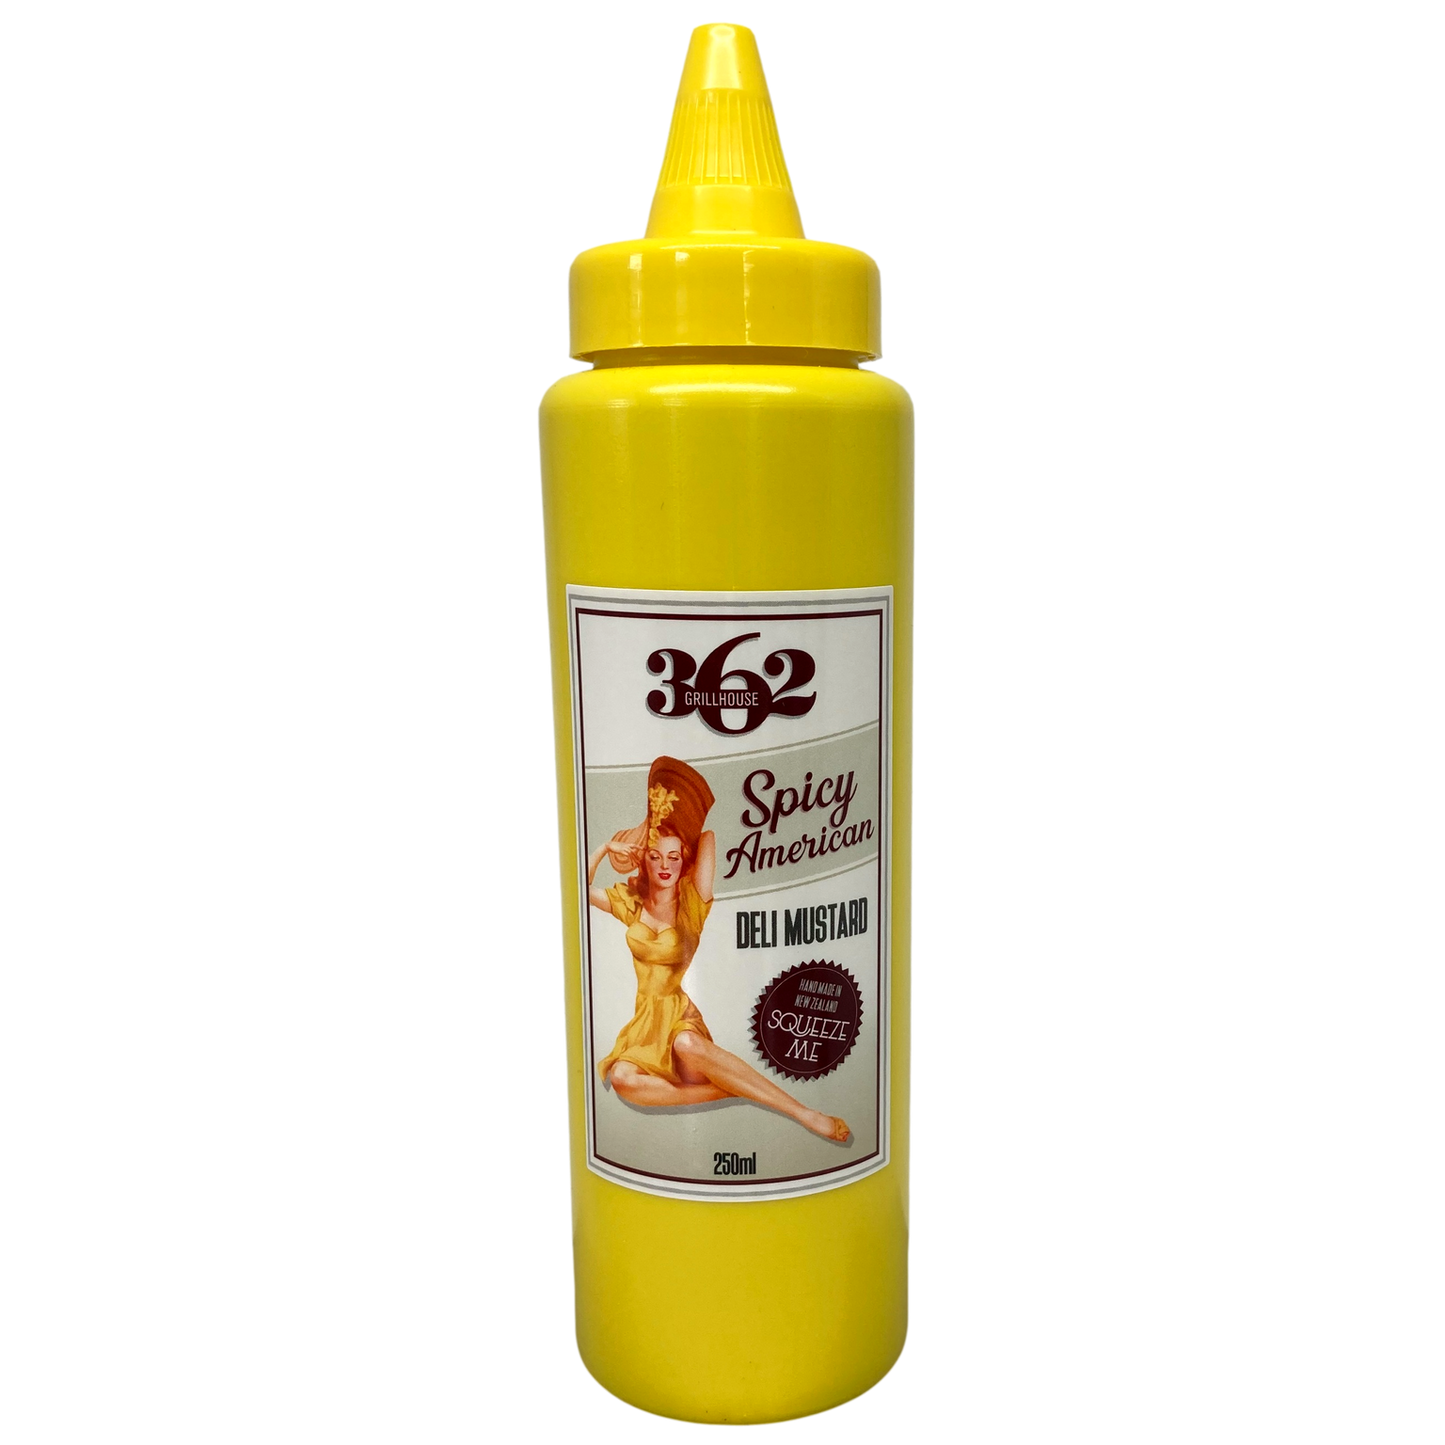 362 Grillhouse - Spicy American Deli Mustard